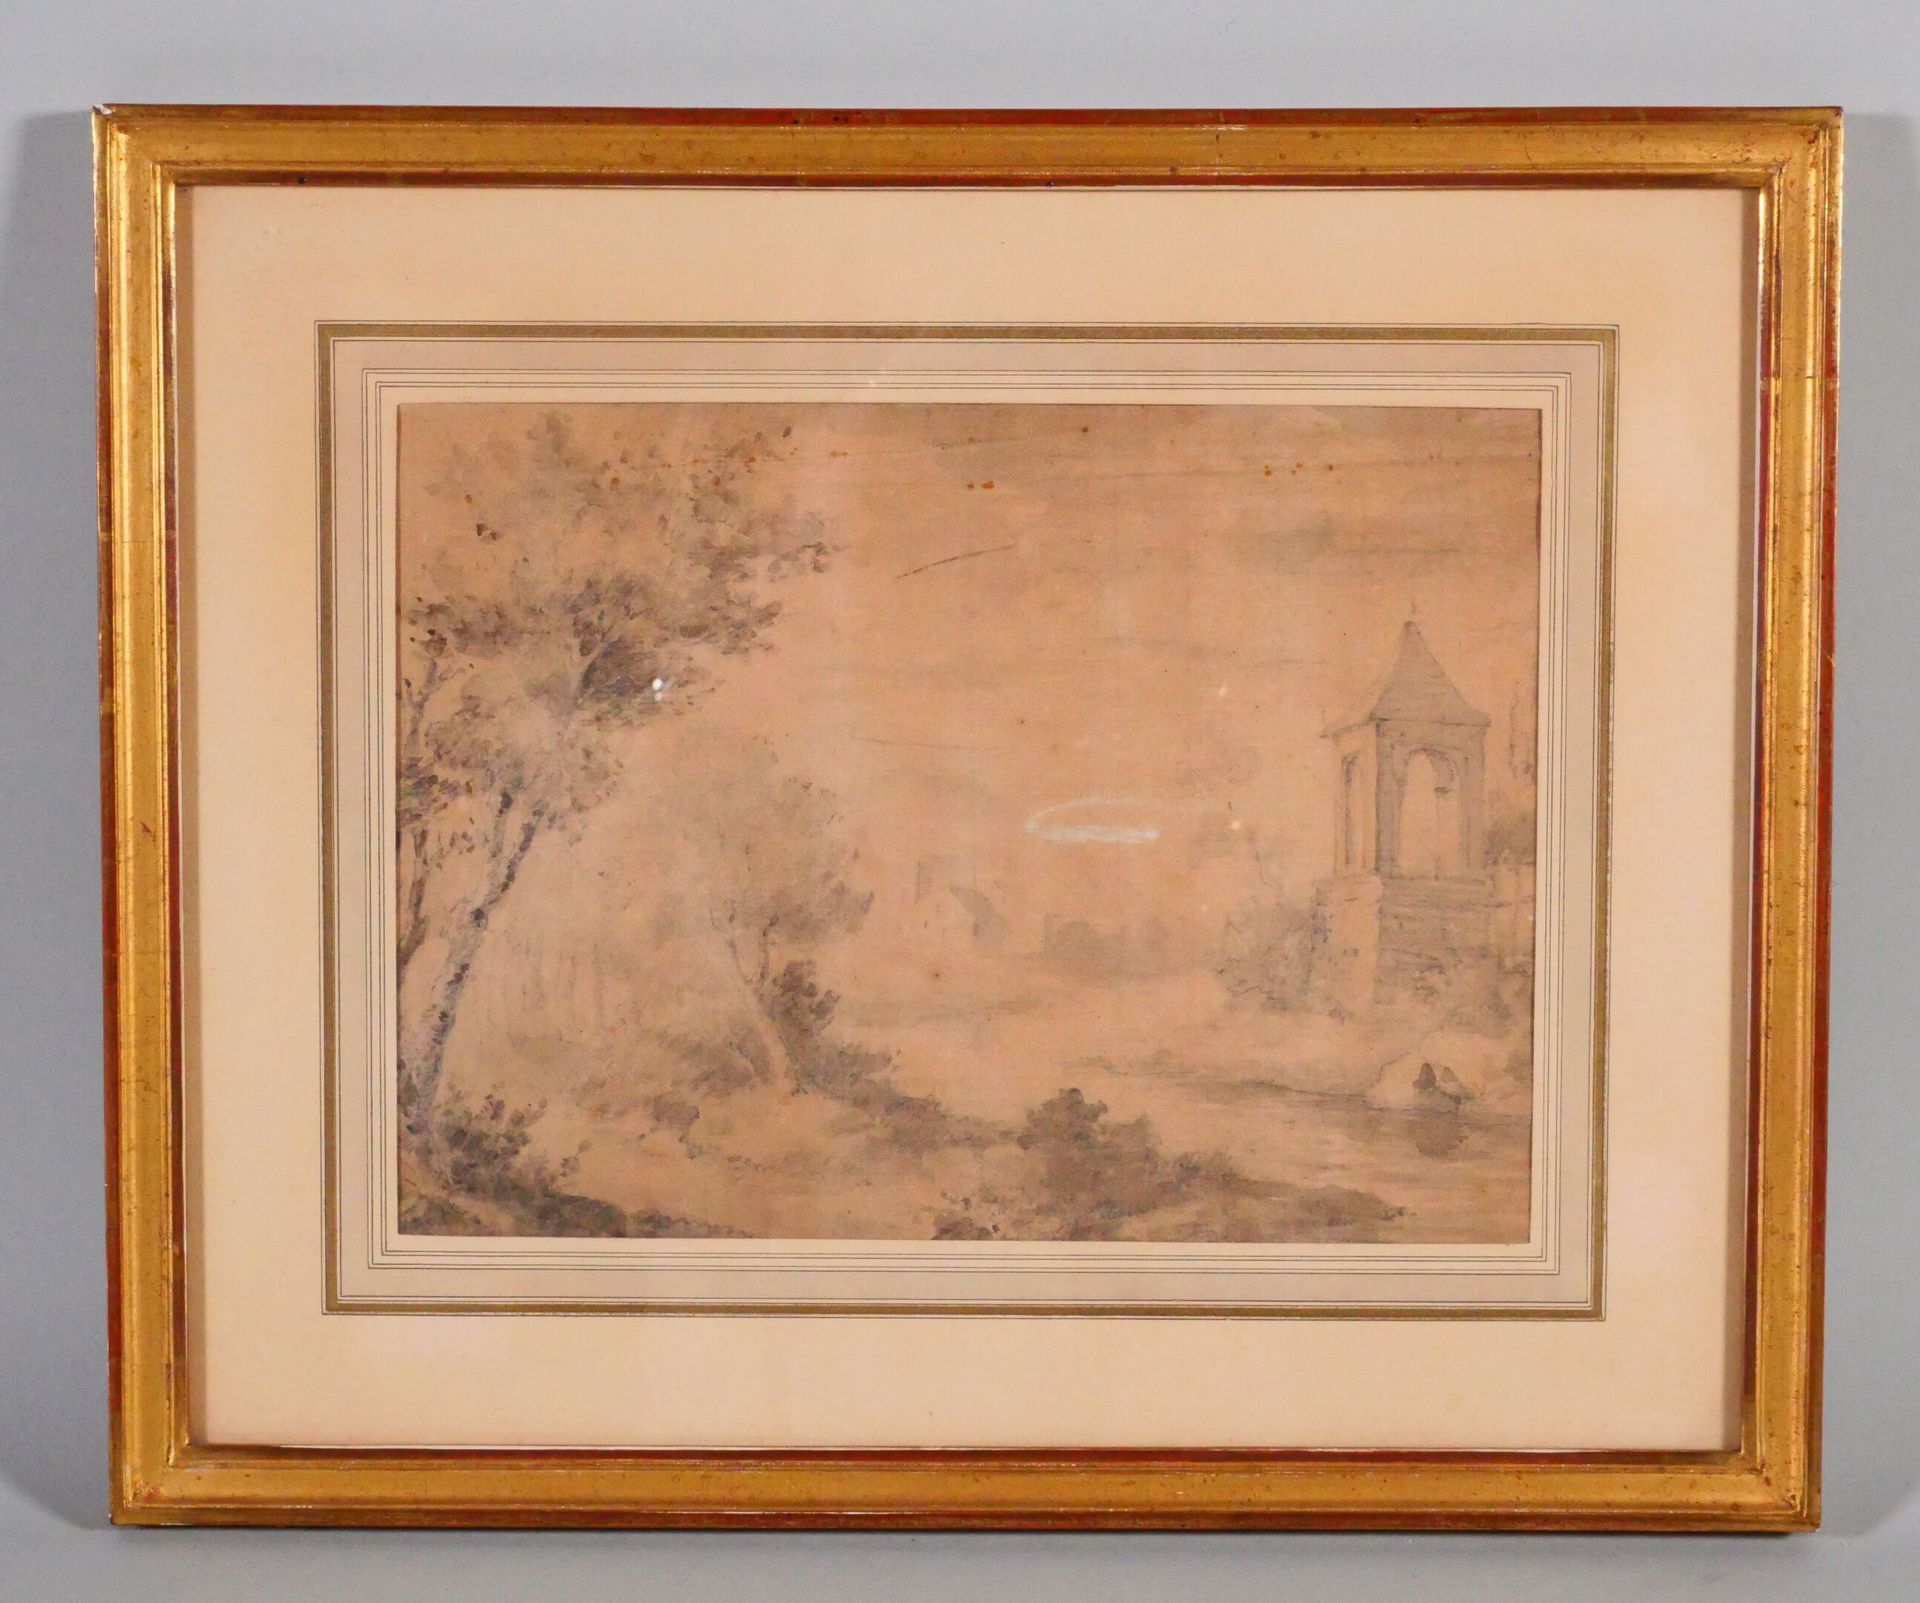 Null 约1800年的法国学校
景观
黑色铅笔线条上的棕色水洗 
视线尺寸：16 x 22厘米
带画框尺寸：27.5 x 33 cm
(弯曲，不牢固)

专家&hellip;